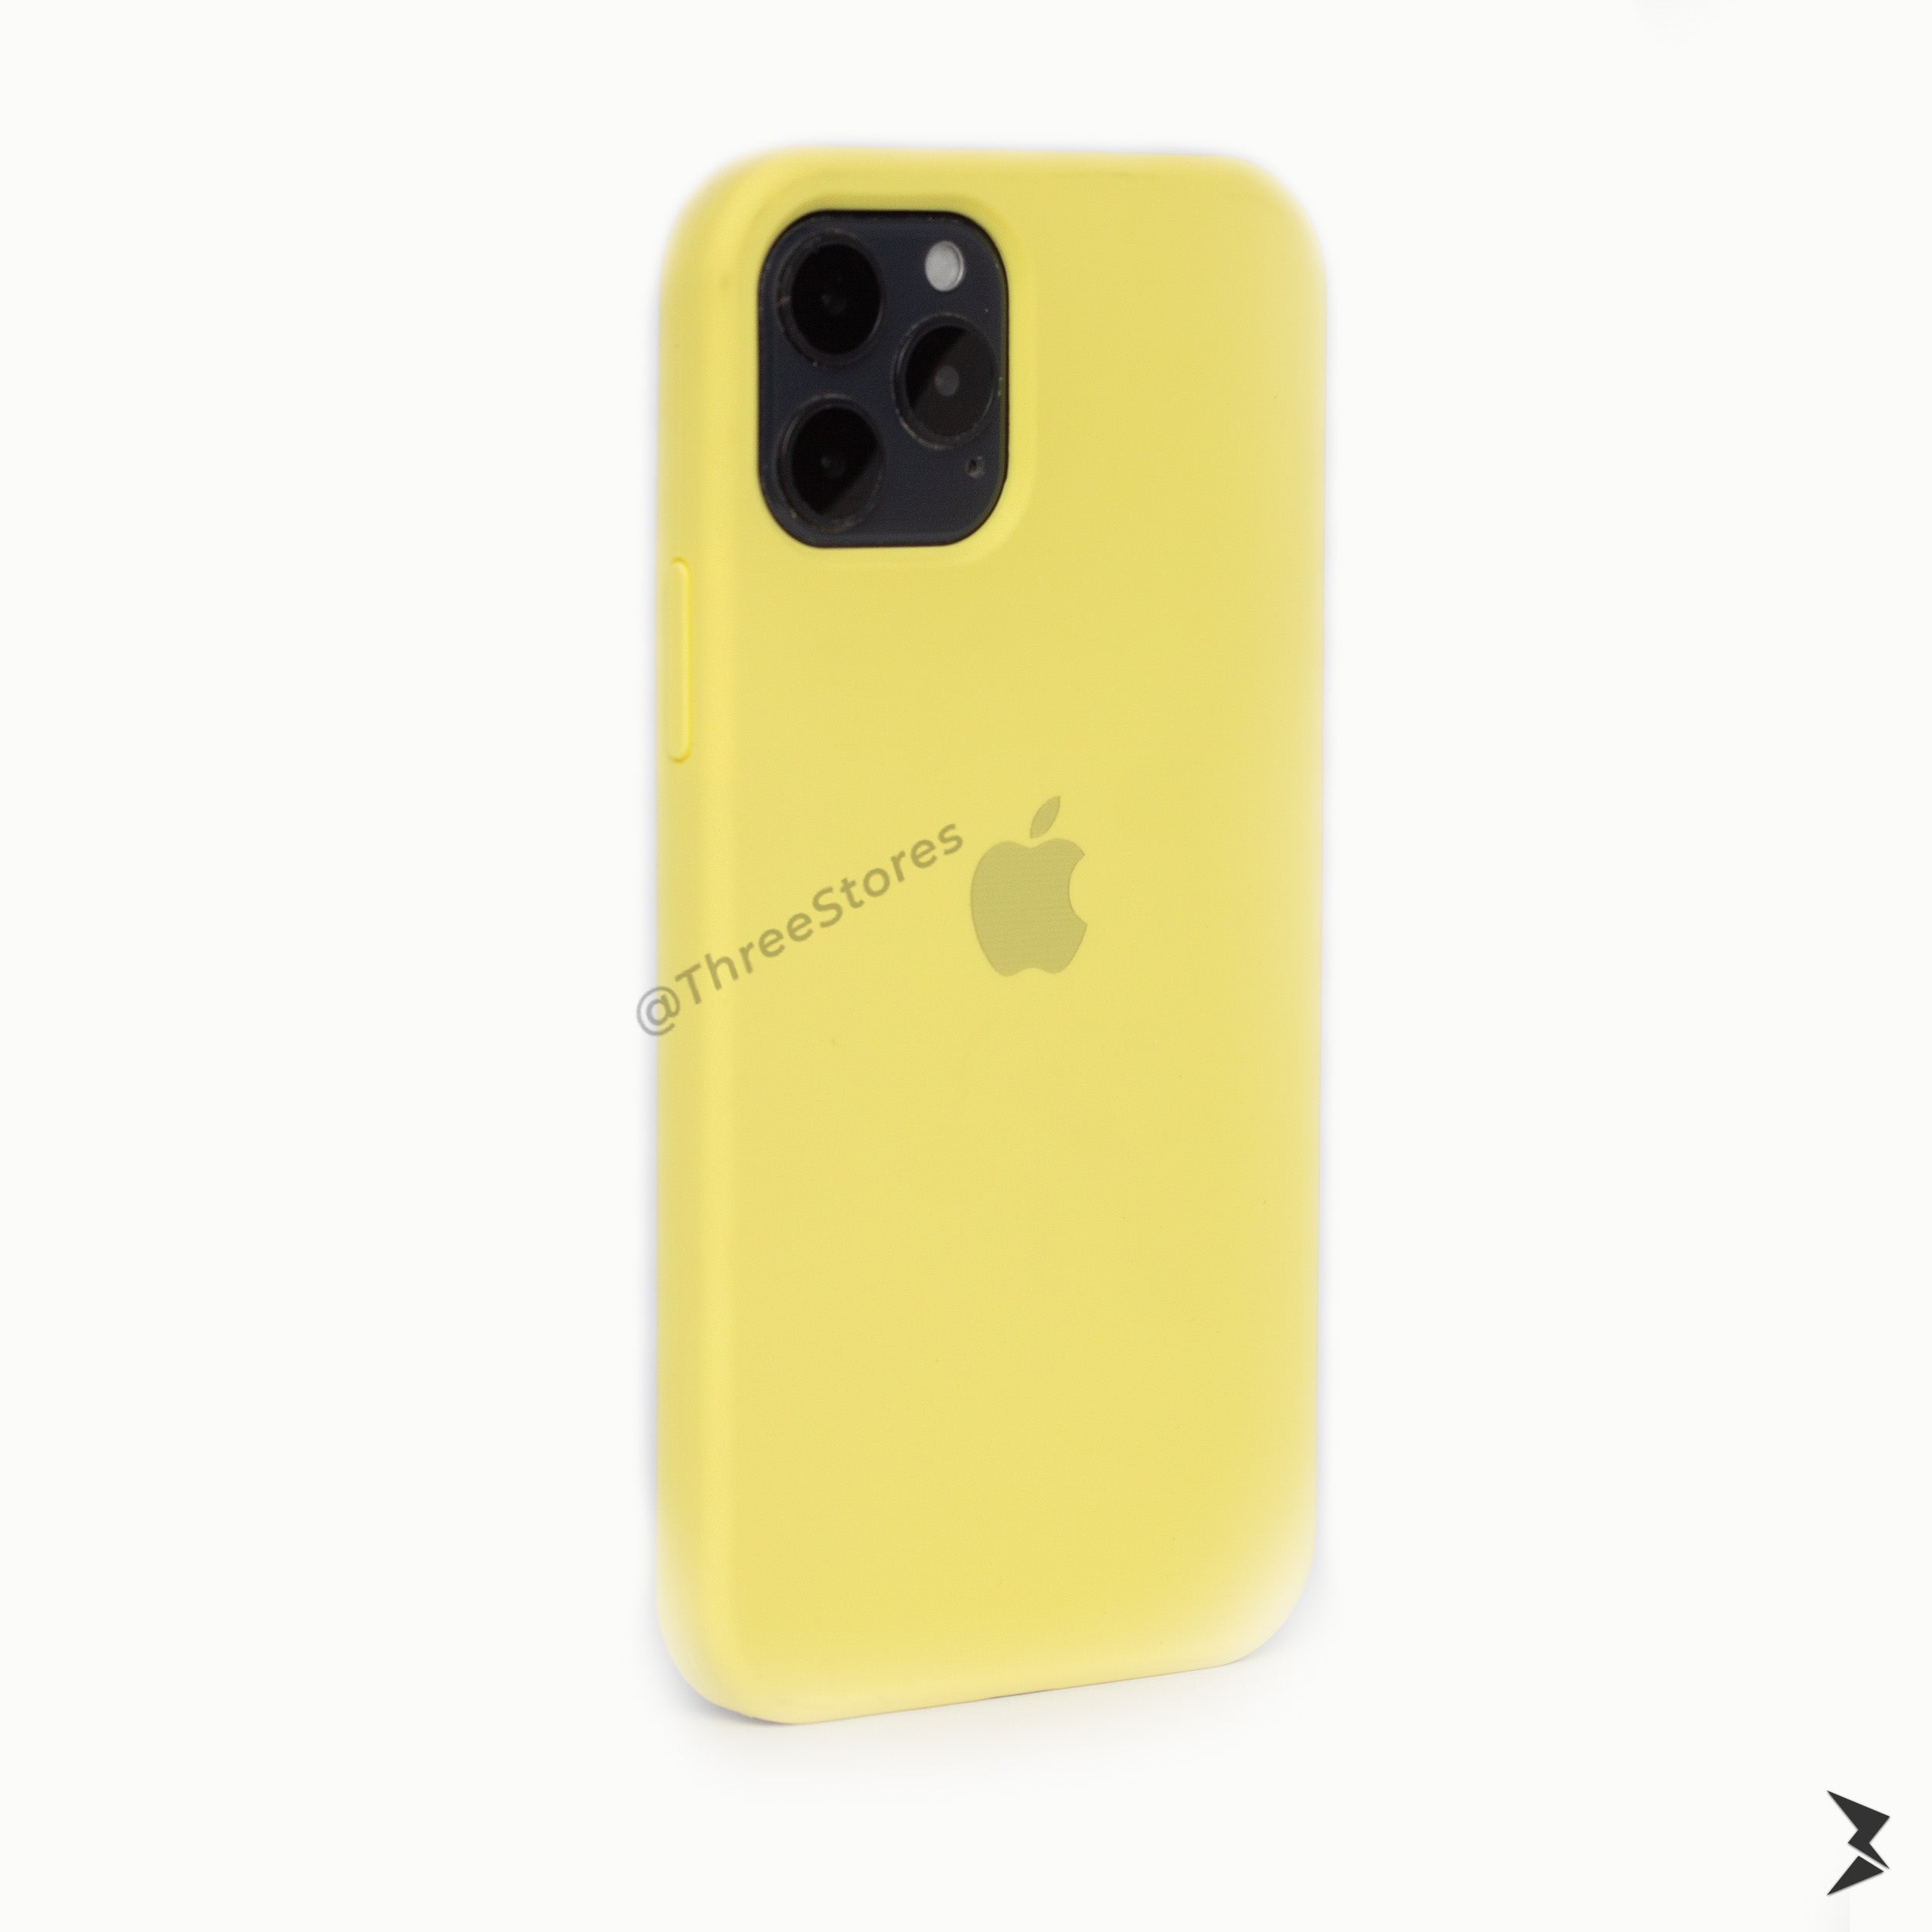 Silicone iPhone 12 pro max case